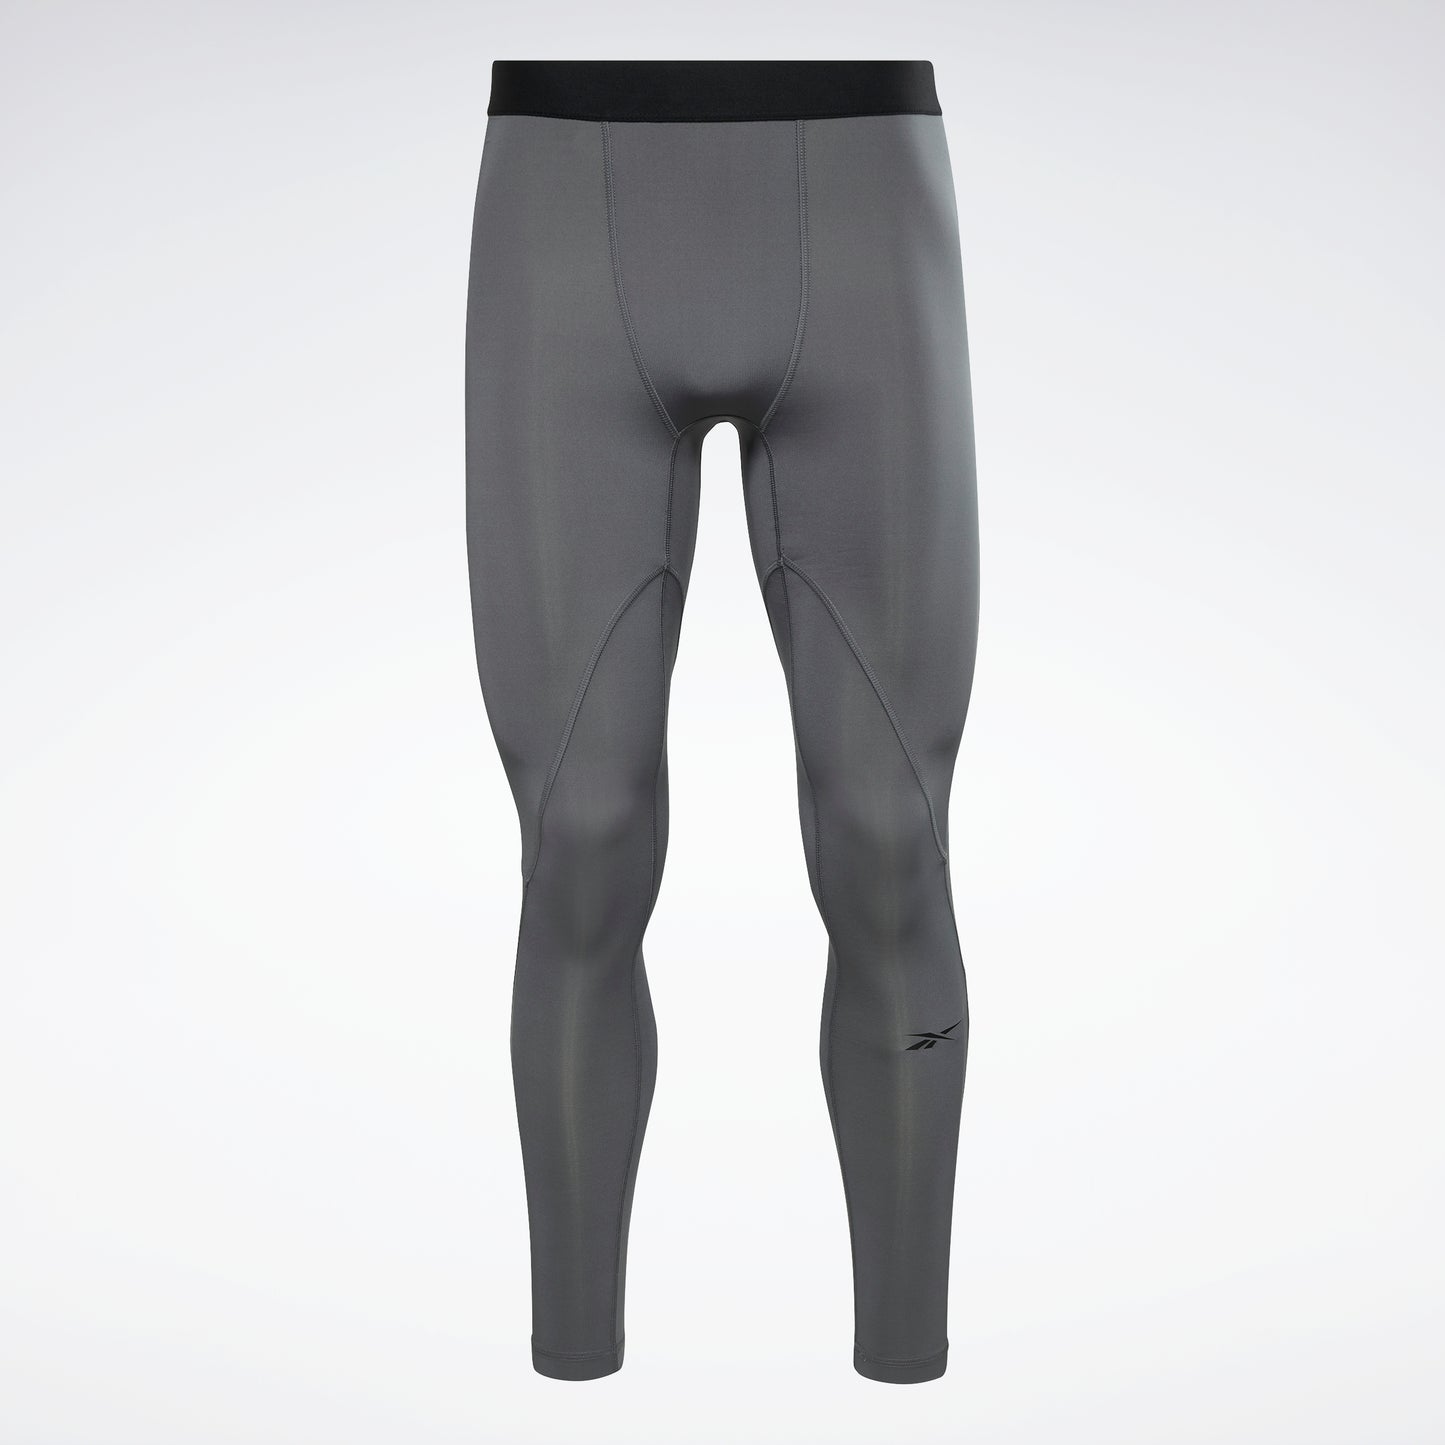 Capreze Compression Pants Men Pocket Running Leggings Tights Athletic  Workout Baselayer